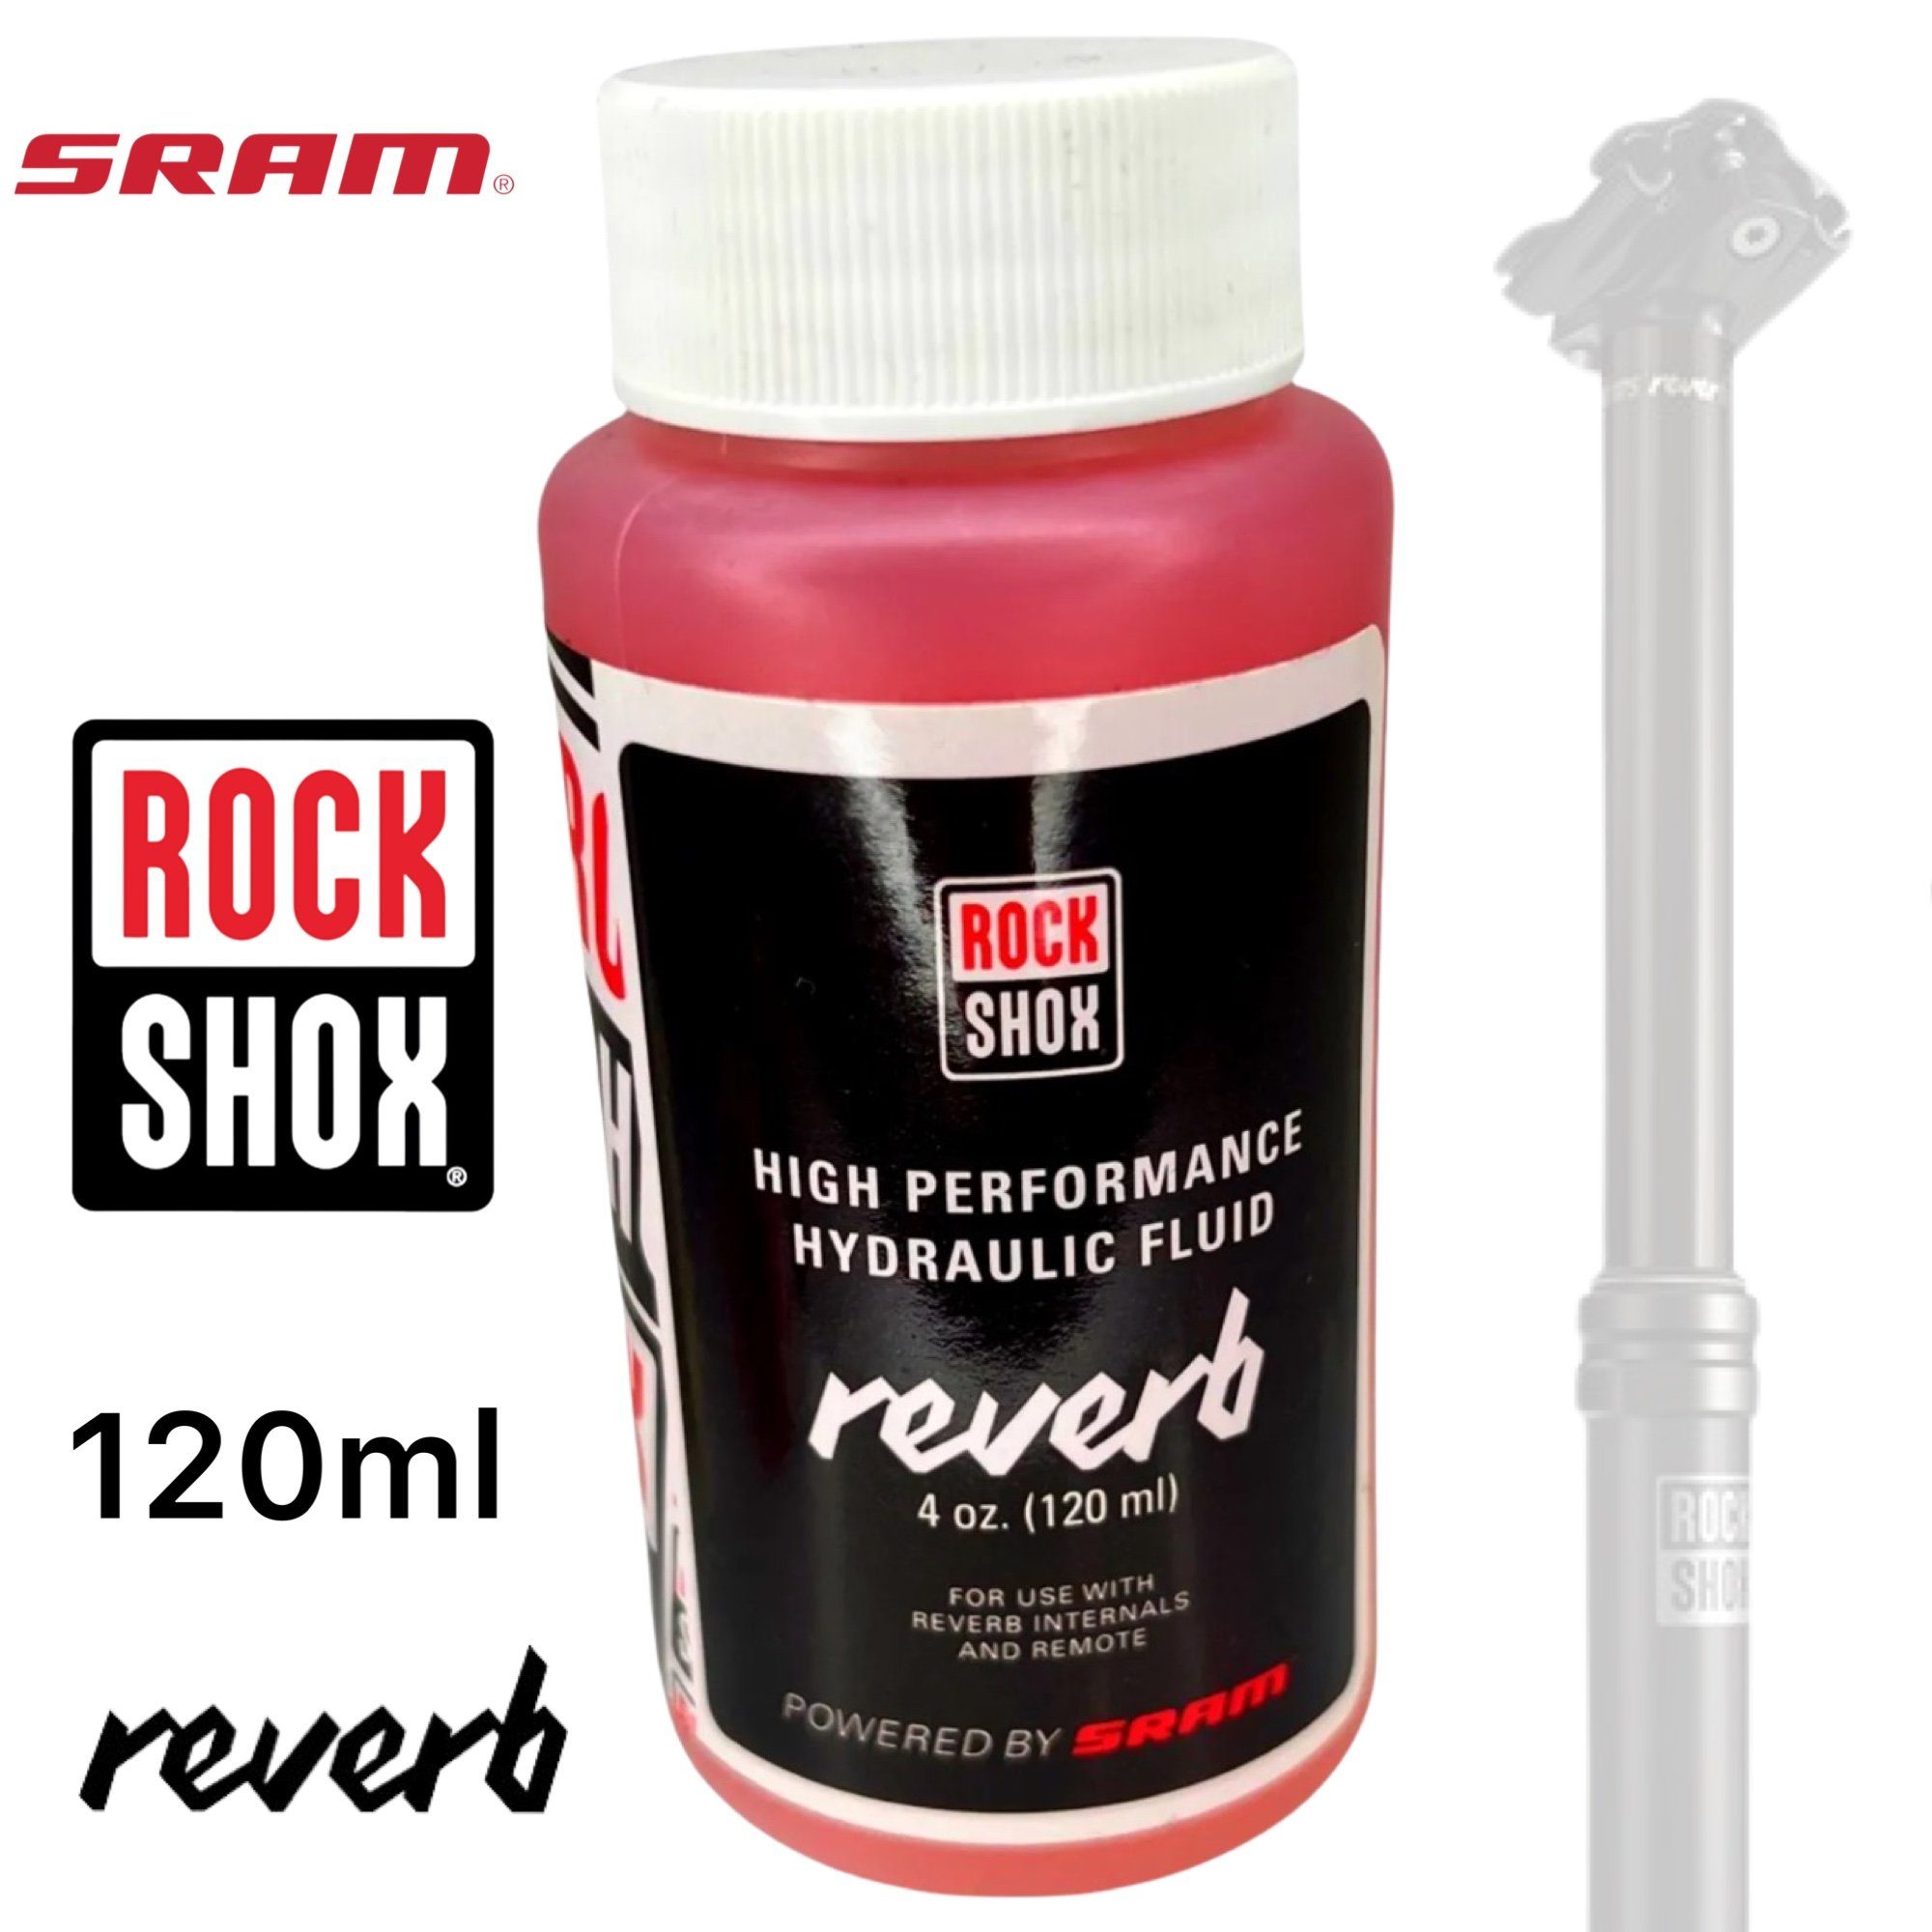 Rock 11.4315.021.070 Shox, Reverb RockShox Öl Fahrrad-Montageständer 120ml, Hydraulik Sattelstützen